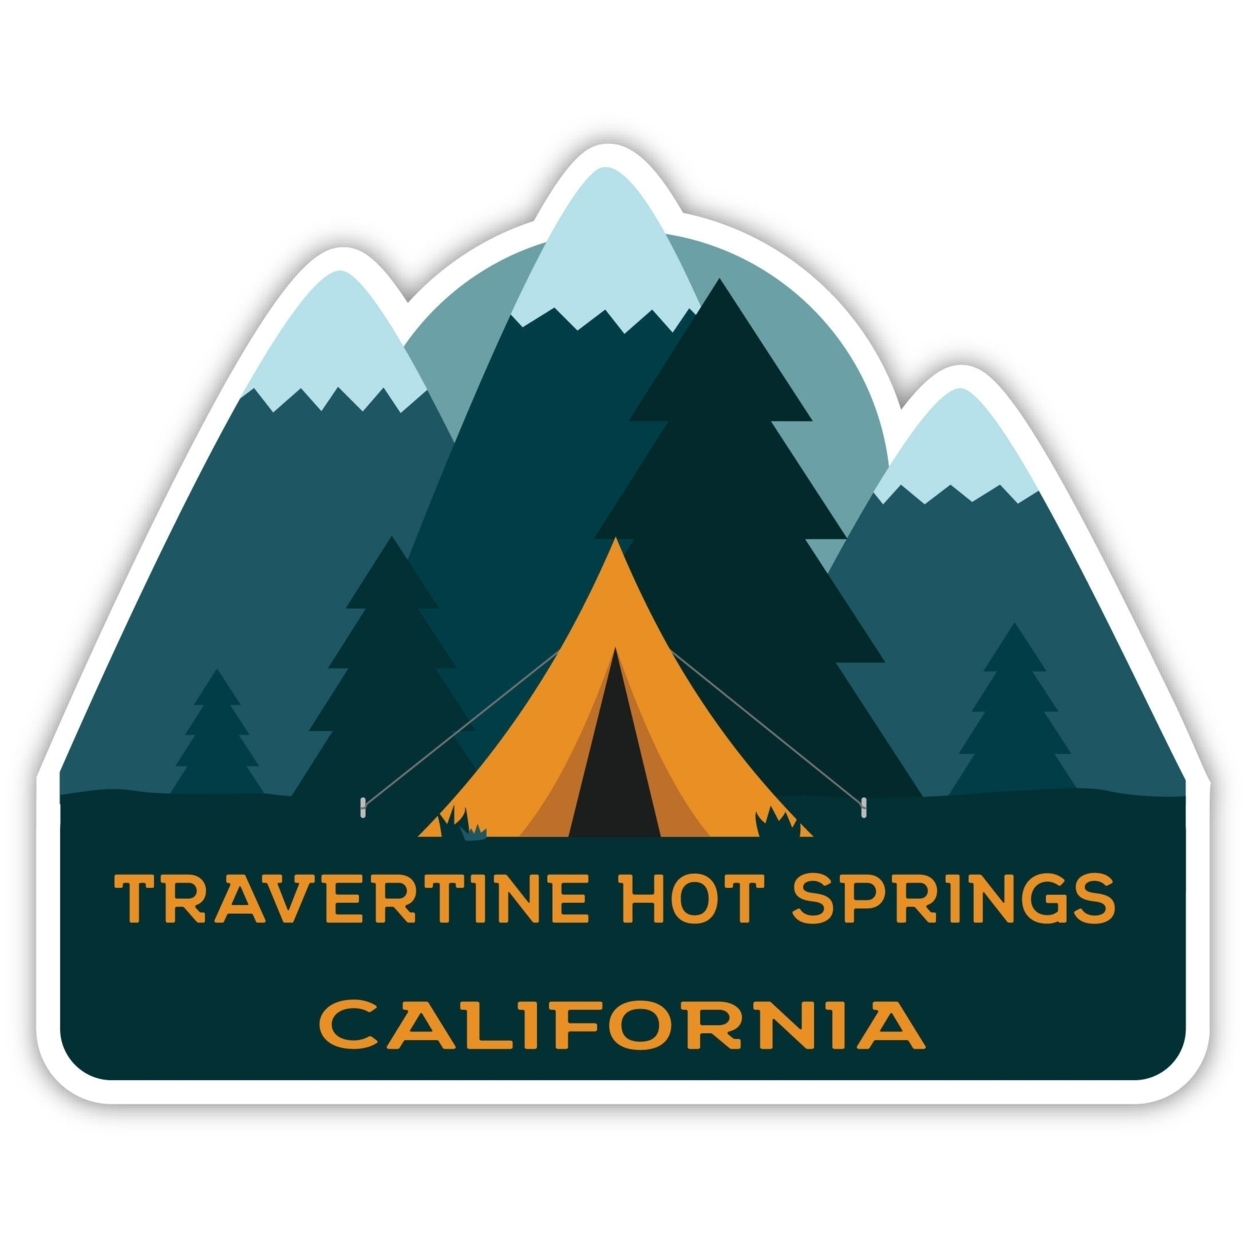 Travertine Hot Springs California Souvenir Decorative Stickers (Choose Theme And Size) - Single Unit, 4-Inch, Tent